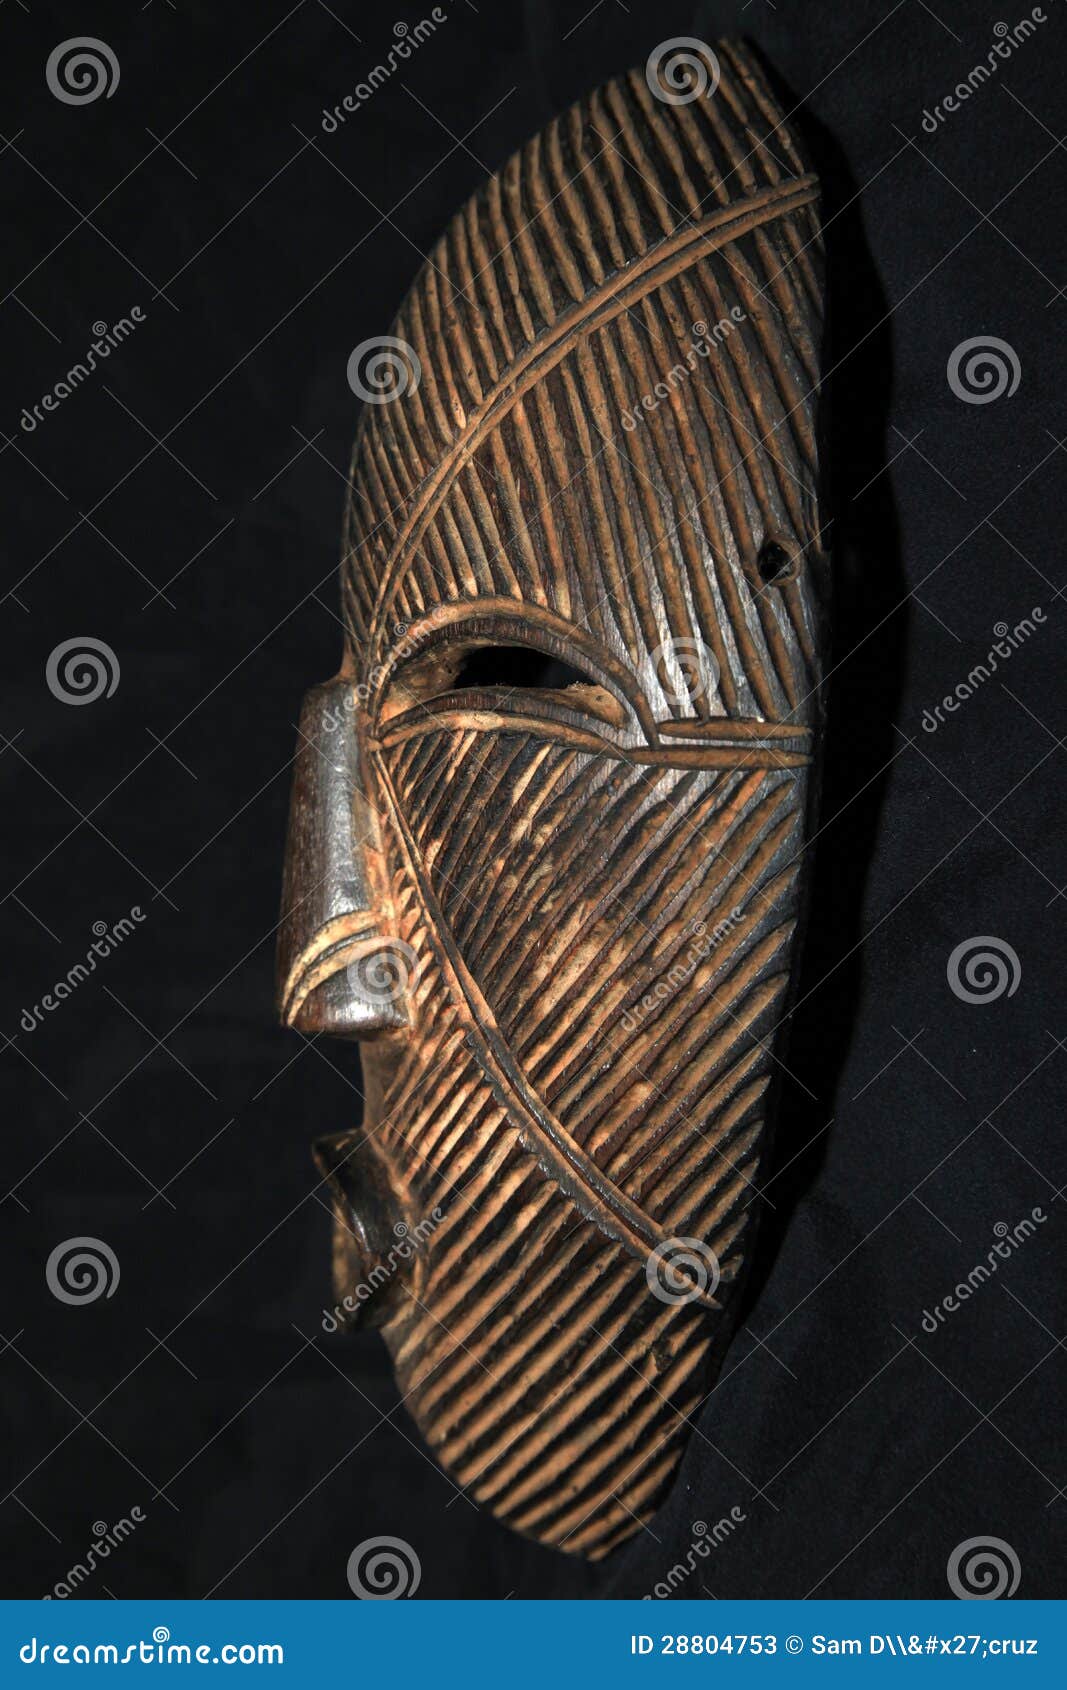 african tribal mask - lega tribe